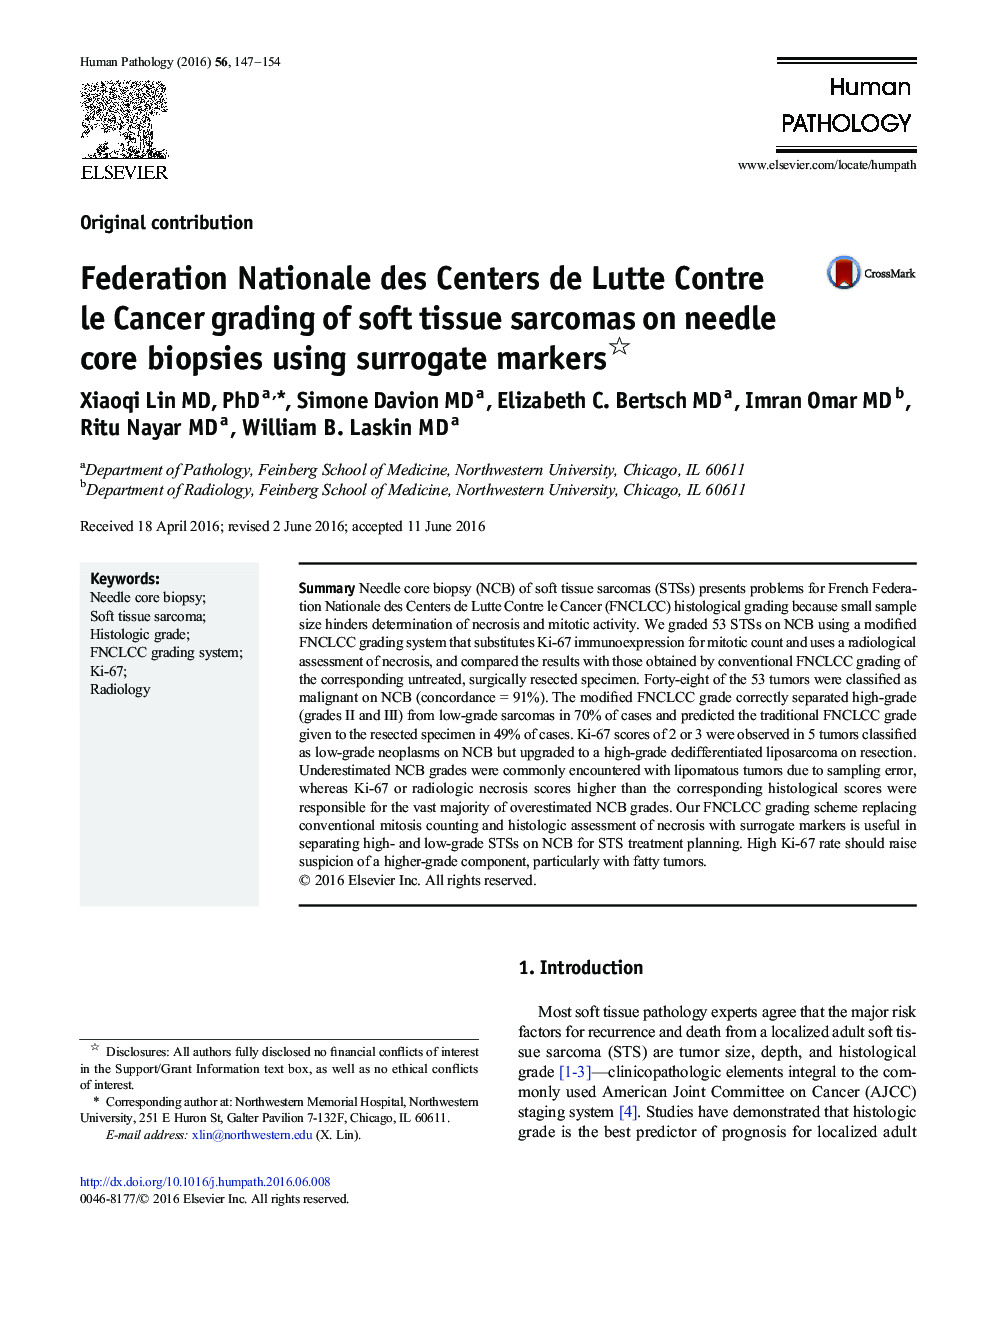 Federation Nationale des Centers de Lutte Contre le Cancer grading of soft tissue sarcomas on needle core biopsies using surrogate markers 